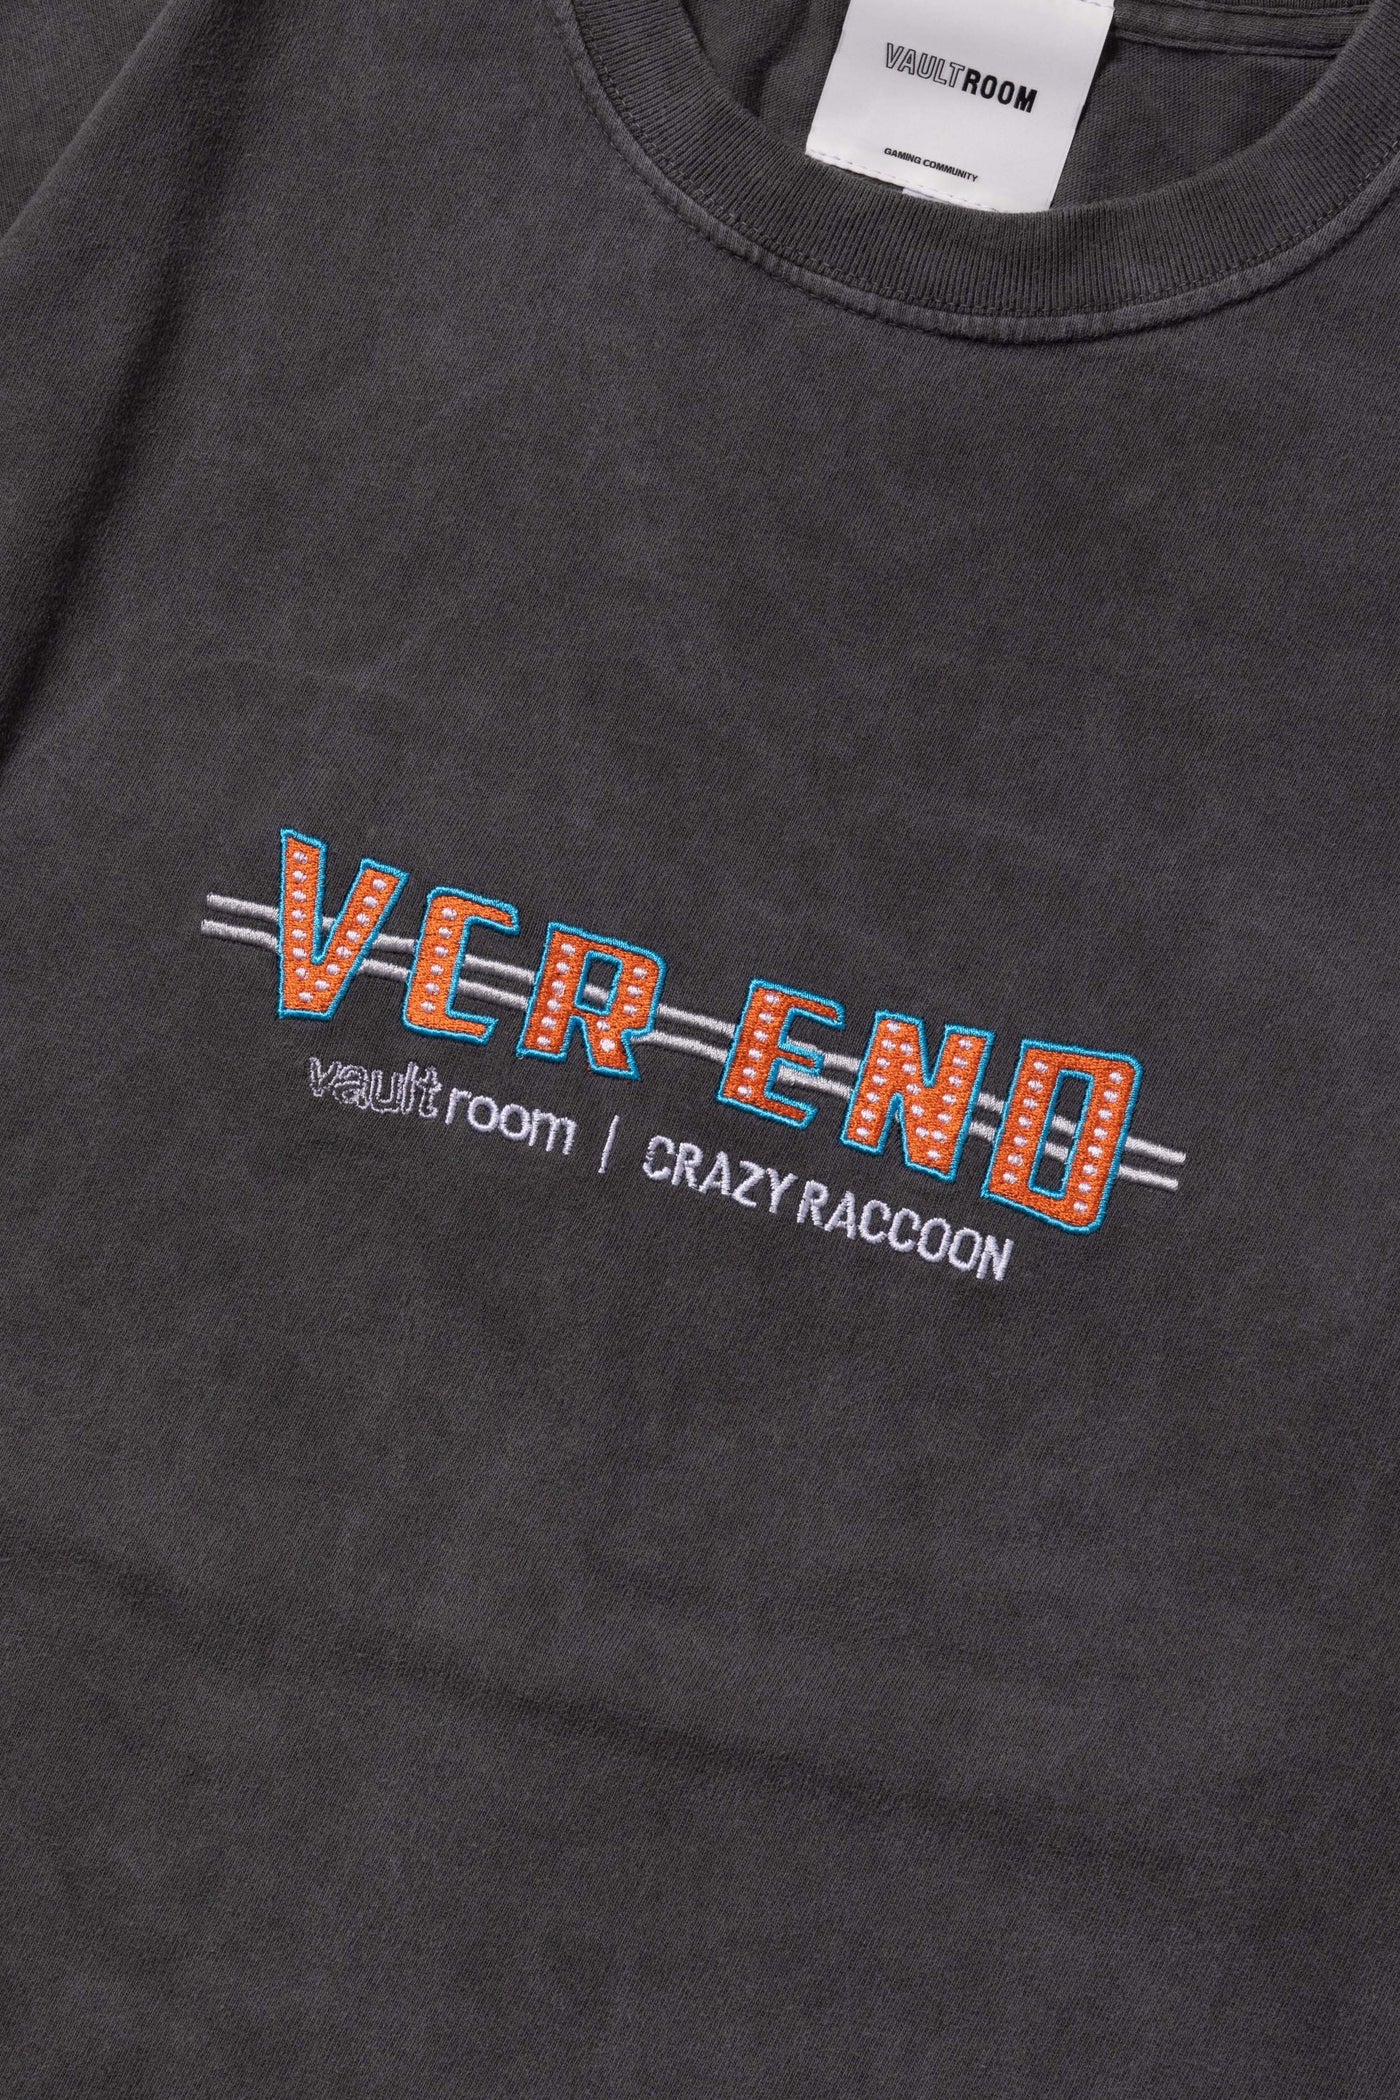 DOI-NO PIZZA TEE / WHT vaultroom - Tシャツ/カットソー(半袖/袖なし)